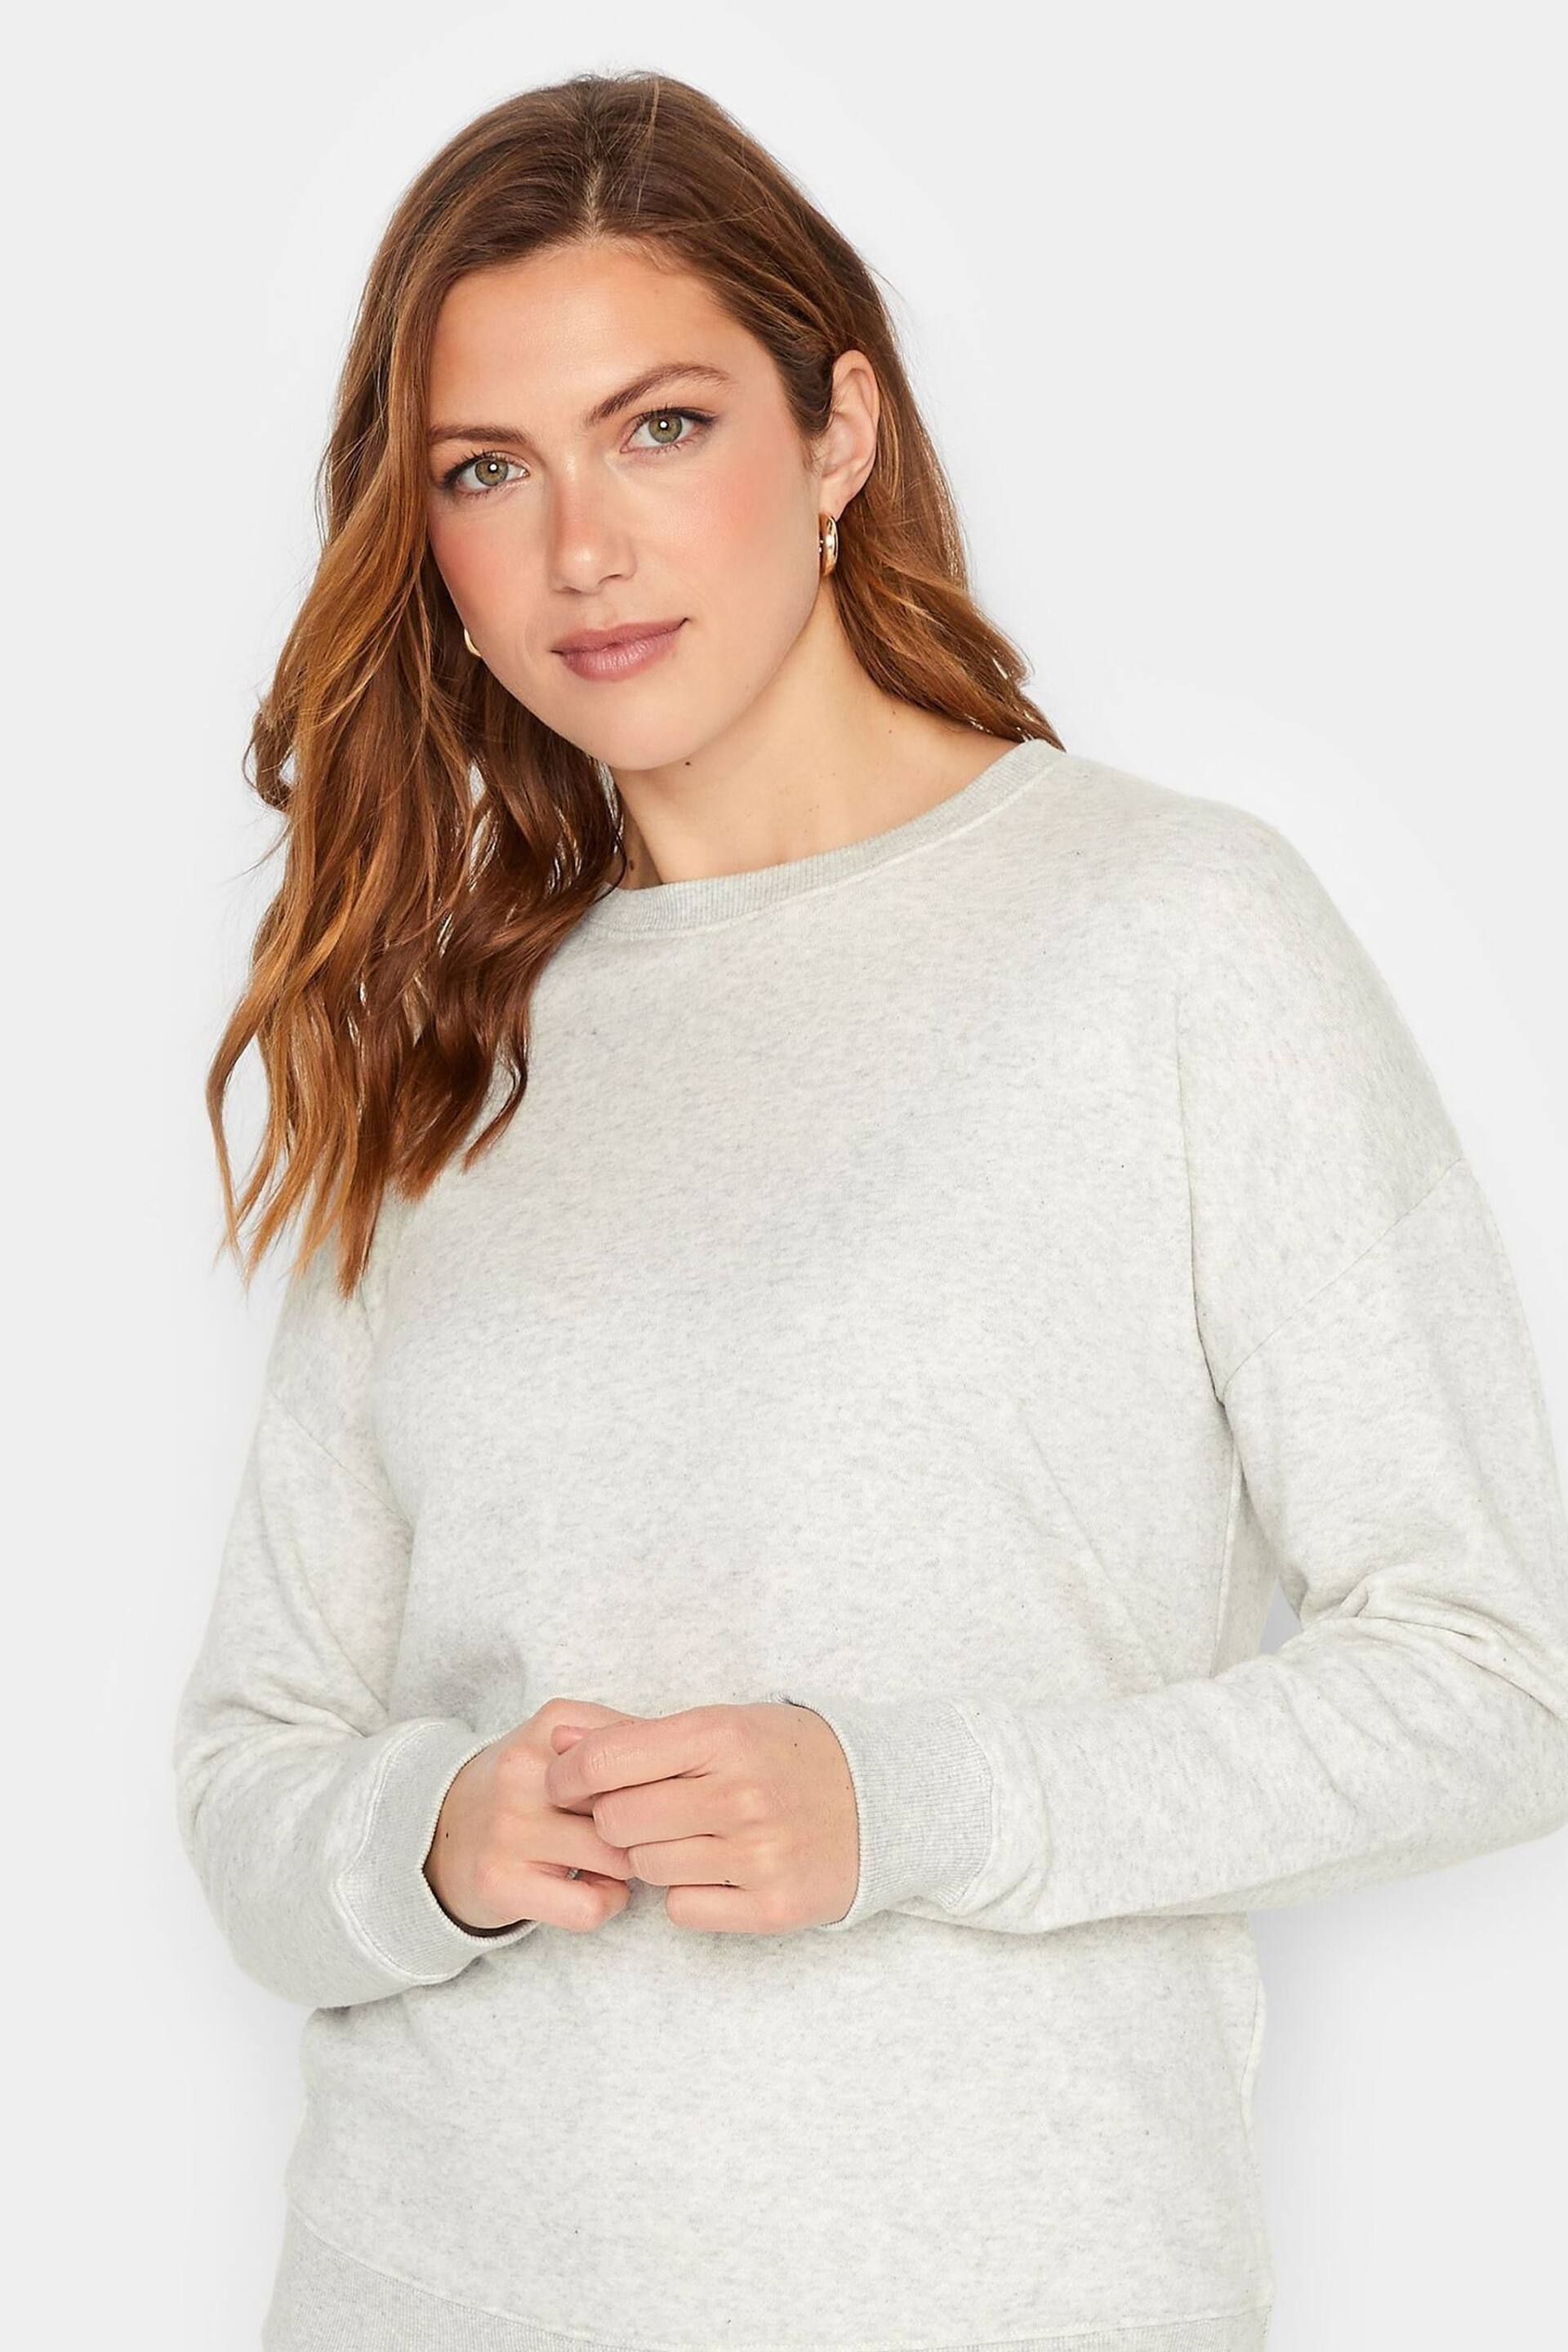 Long Tall Sally Grey Sweatshirt - Image 3 of 5